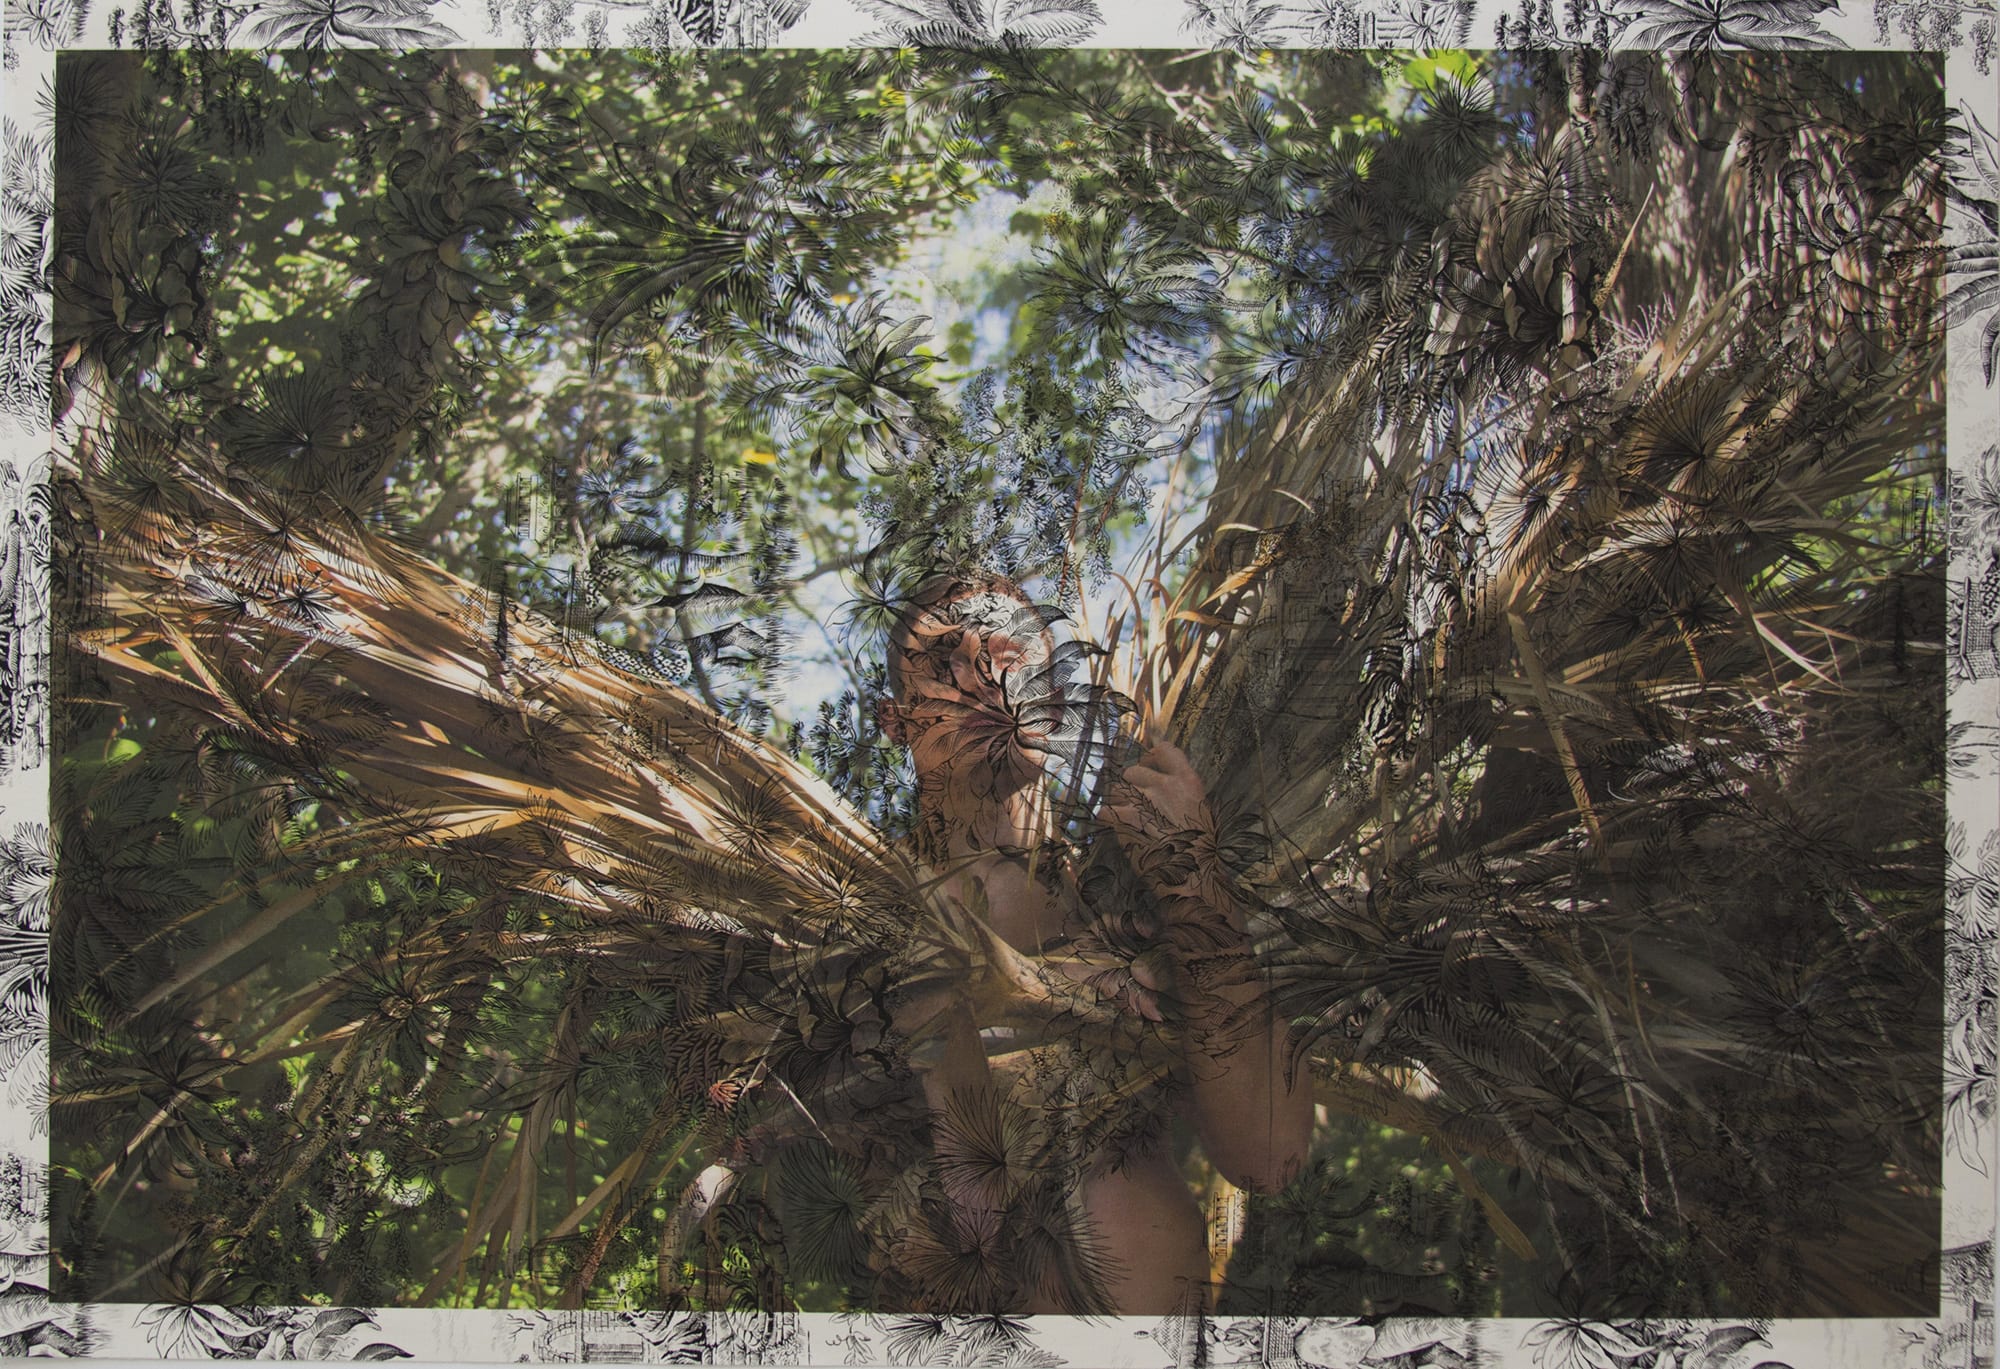 Tim Hailand, Arnaud Cizergues Dead Palms Captiva (on black tiger toile), digital pigment print on patterned toile de Jouy fabric, 26" x 38", unique print, 2013